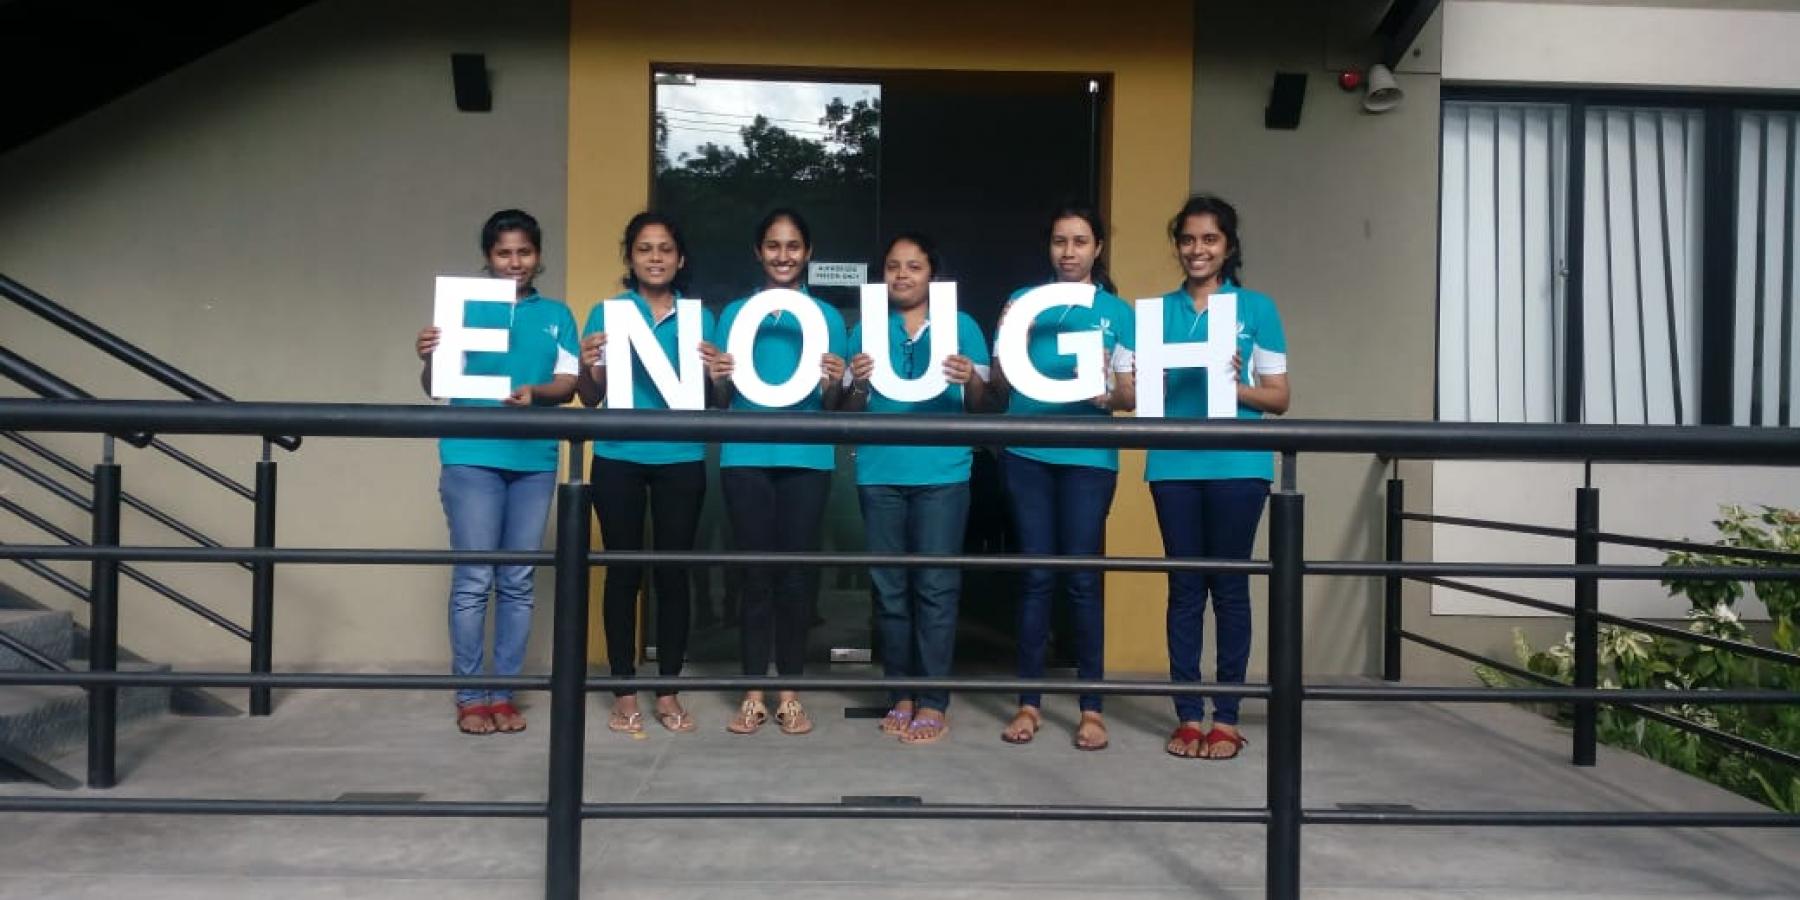 2018 Global Week for Action on NCDs | Sri Lanka